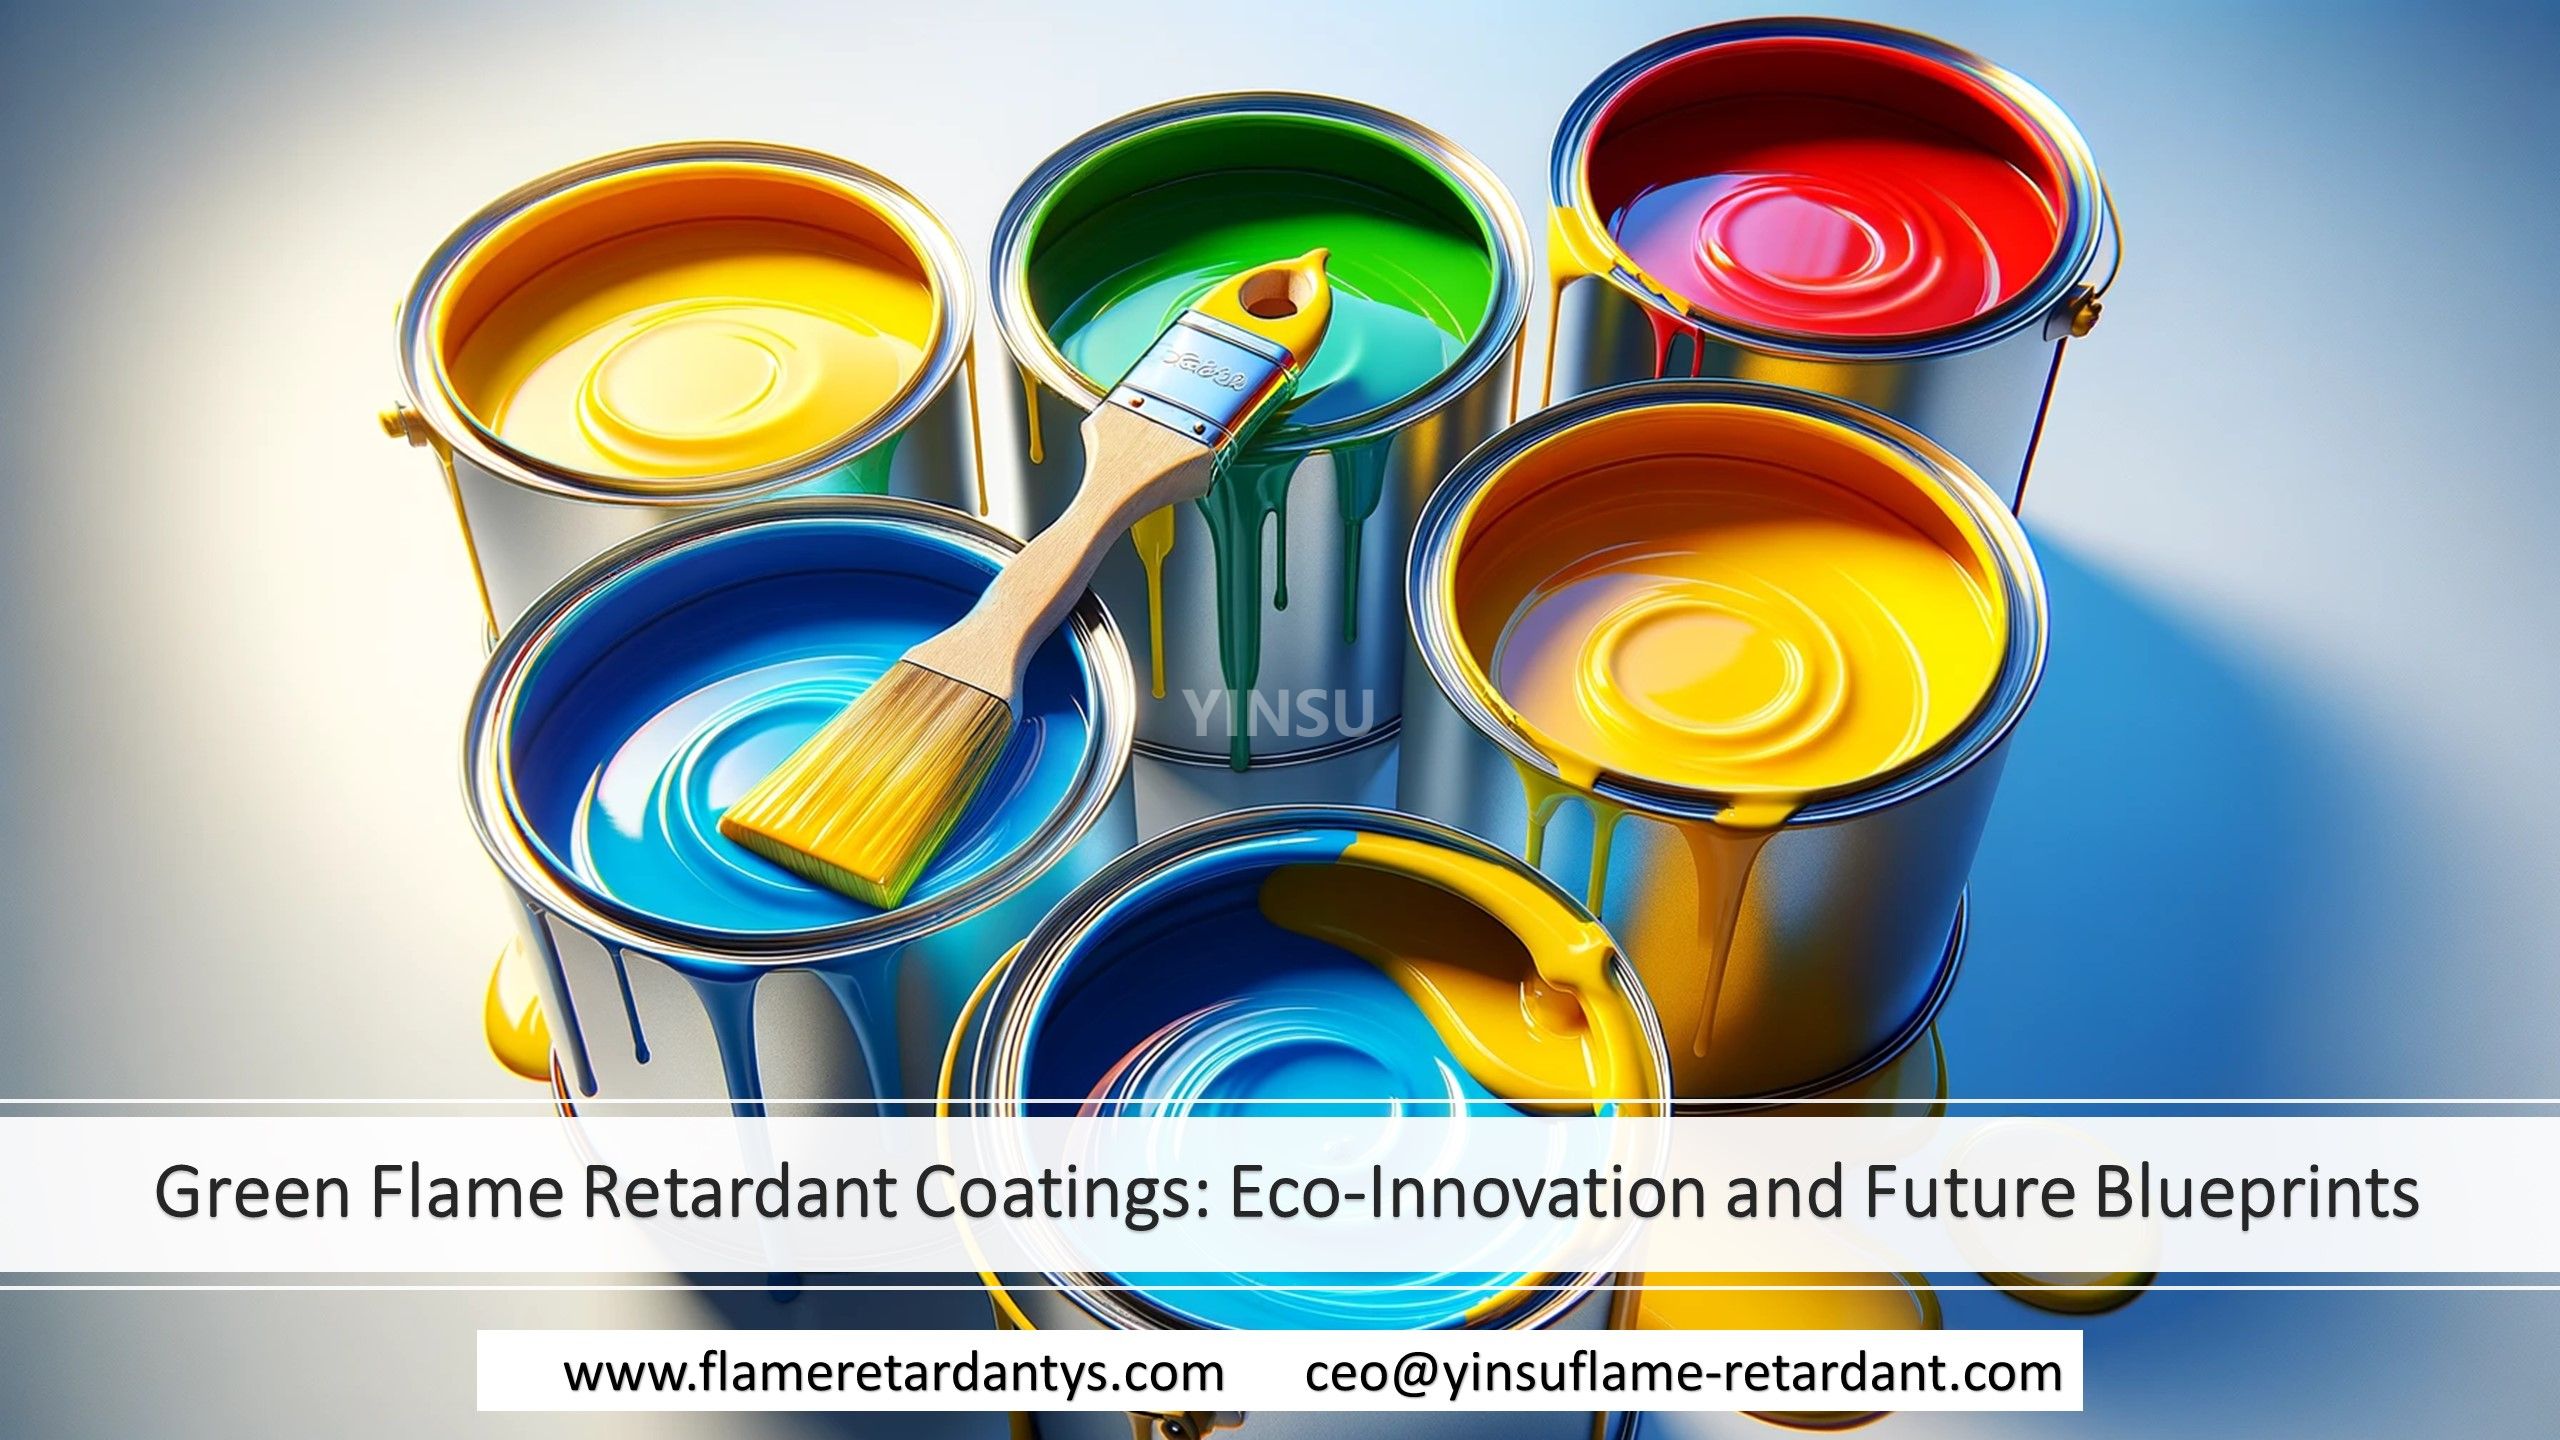 Green Flame Retardant Coatings Eco-Innovation and Future Blueprints